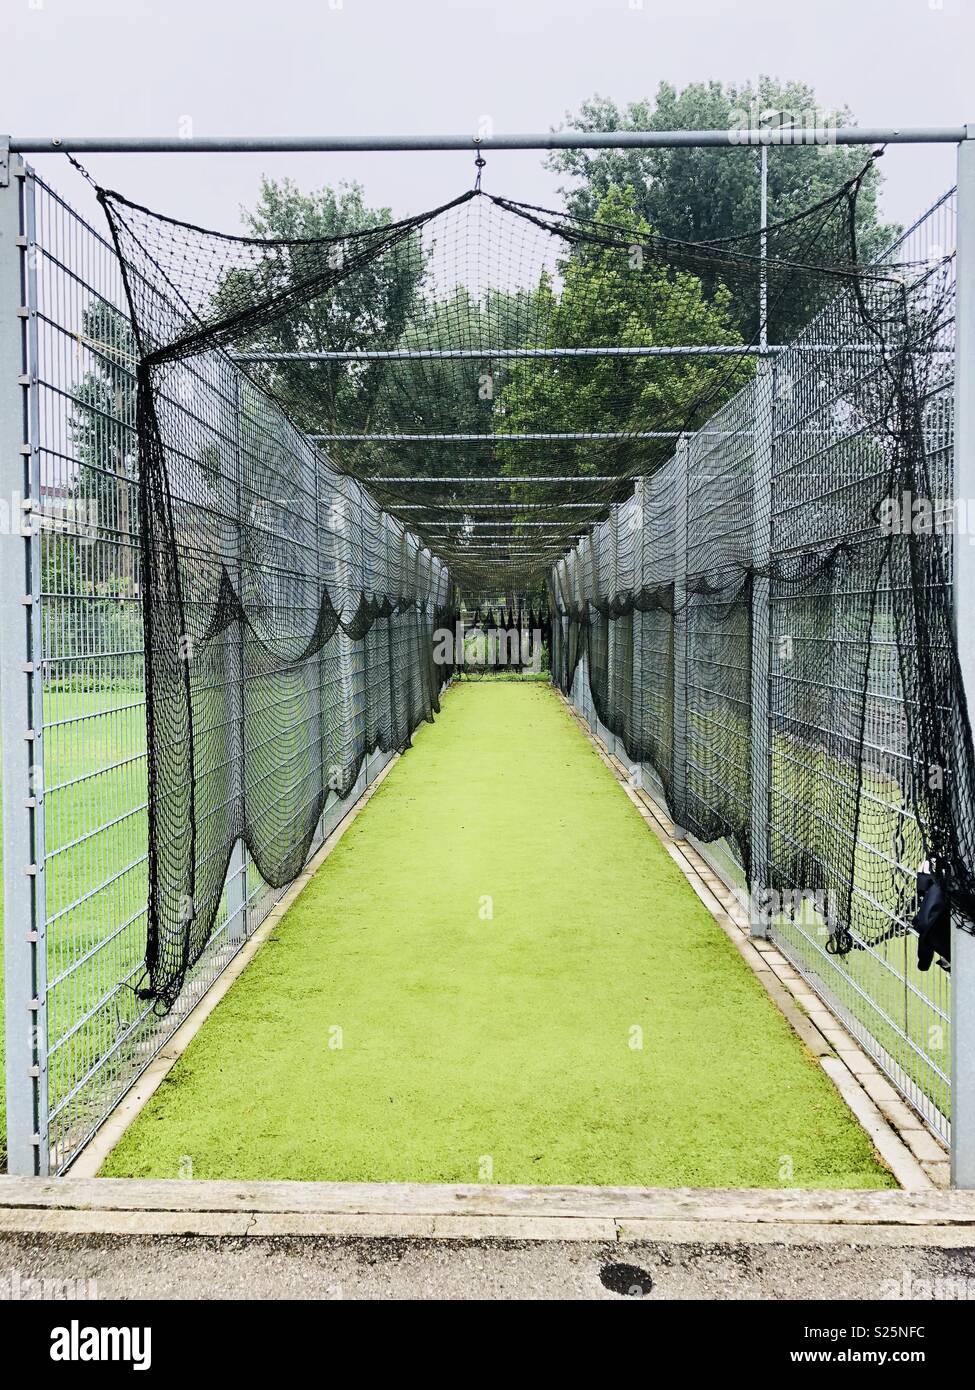 Cricket practise nets Stock Photo